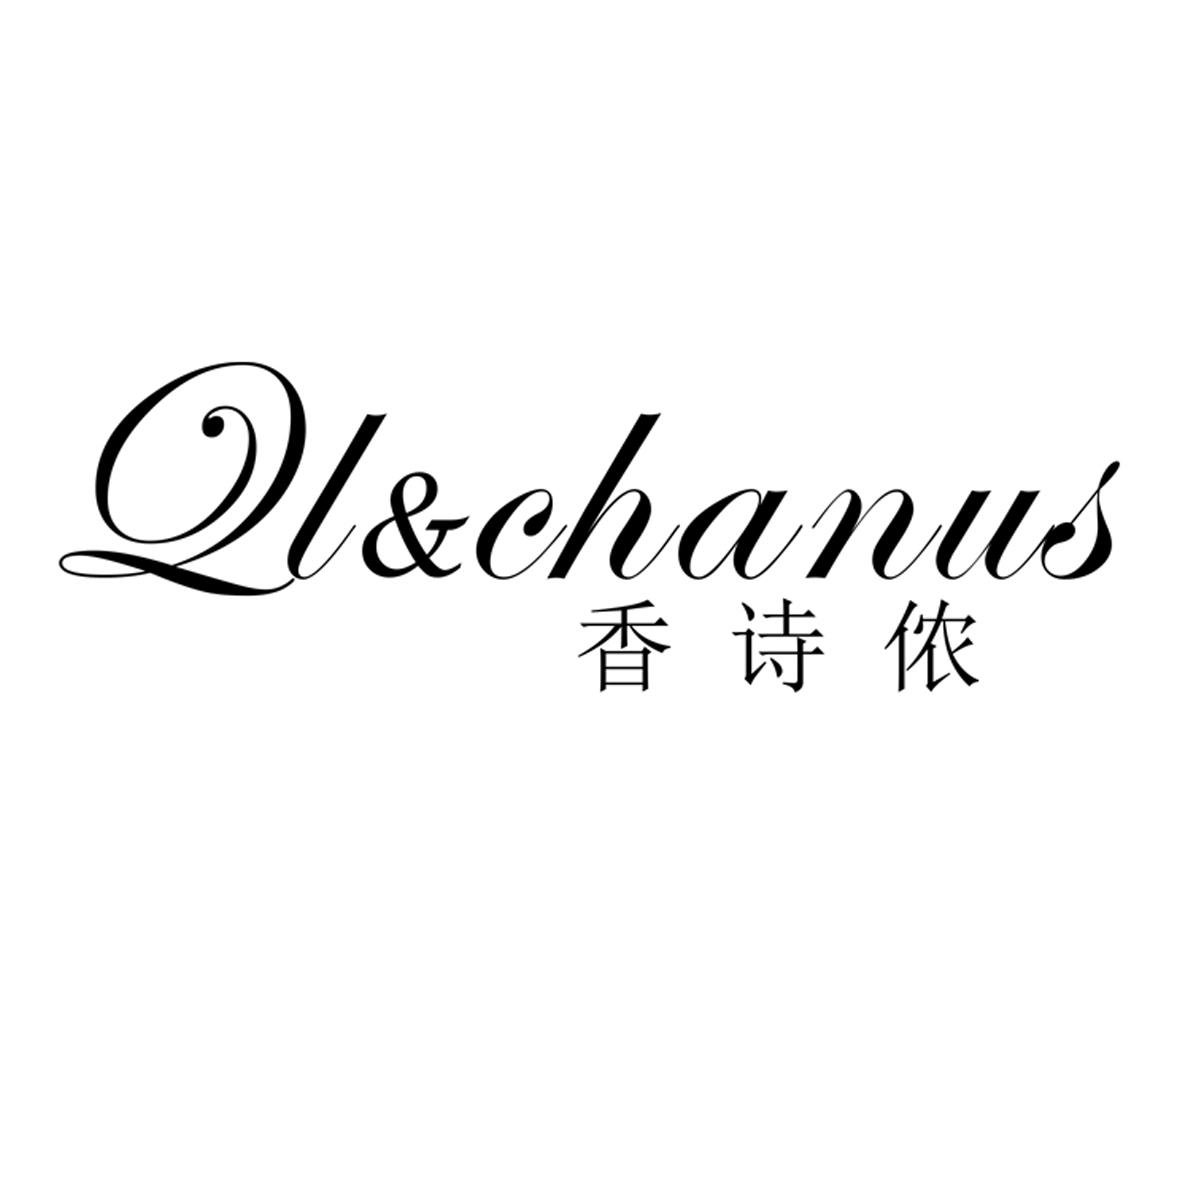 QL&chanus 香诗侬喷香水器商标转让费用买卖交易流程